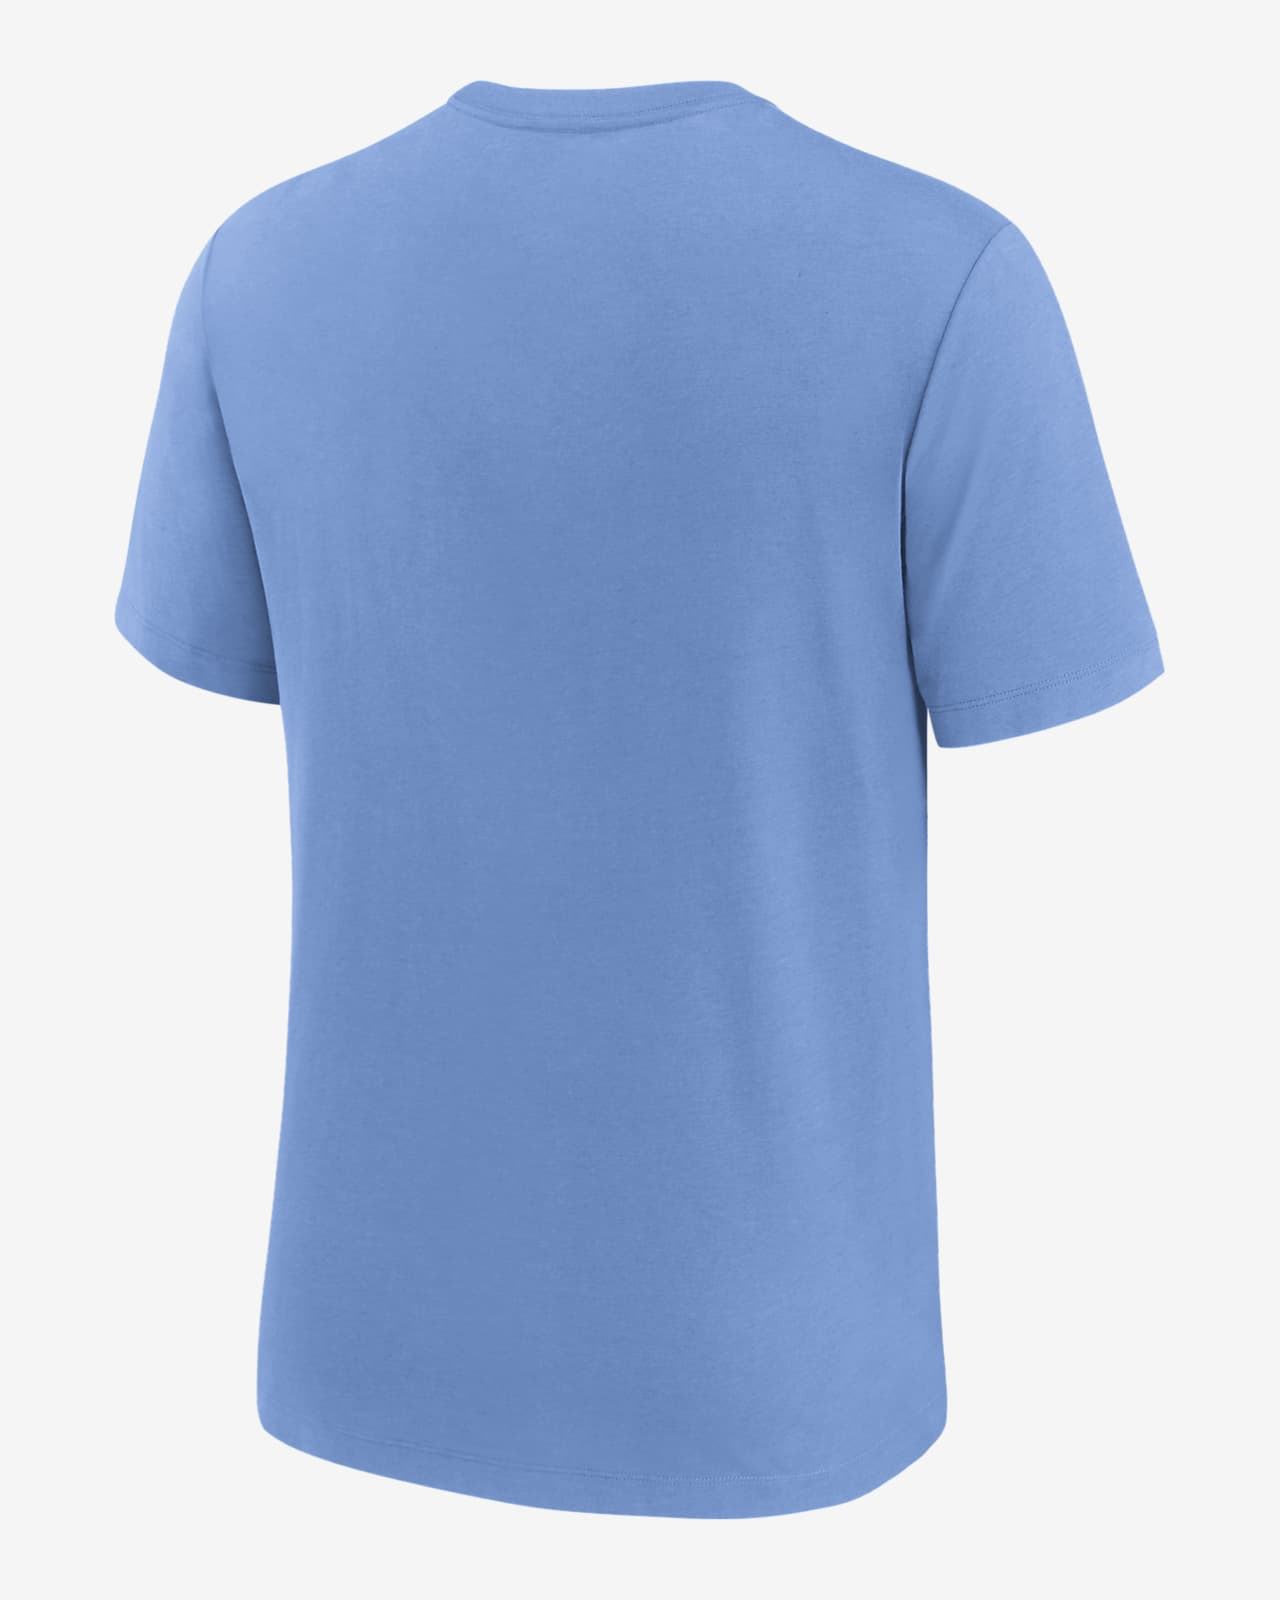 Nike Cooperstown Rewind Arch (MLB Chicago White Sox) Men's T-Shirt.